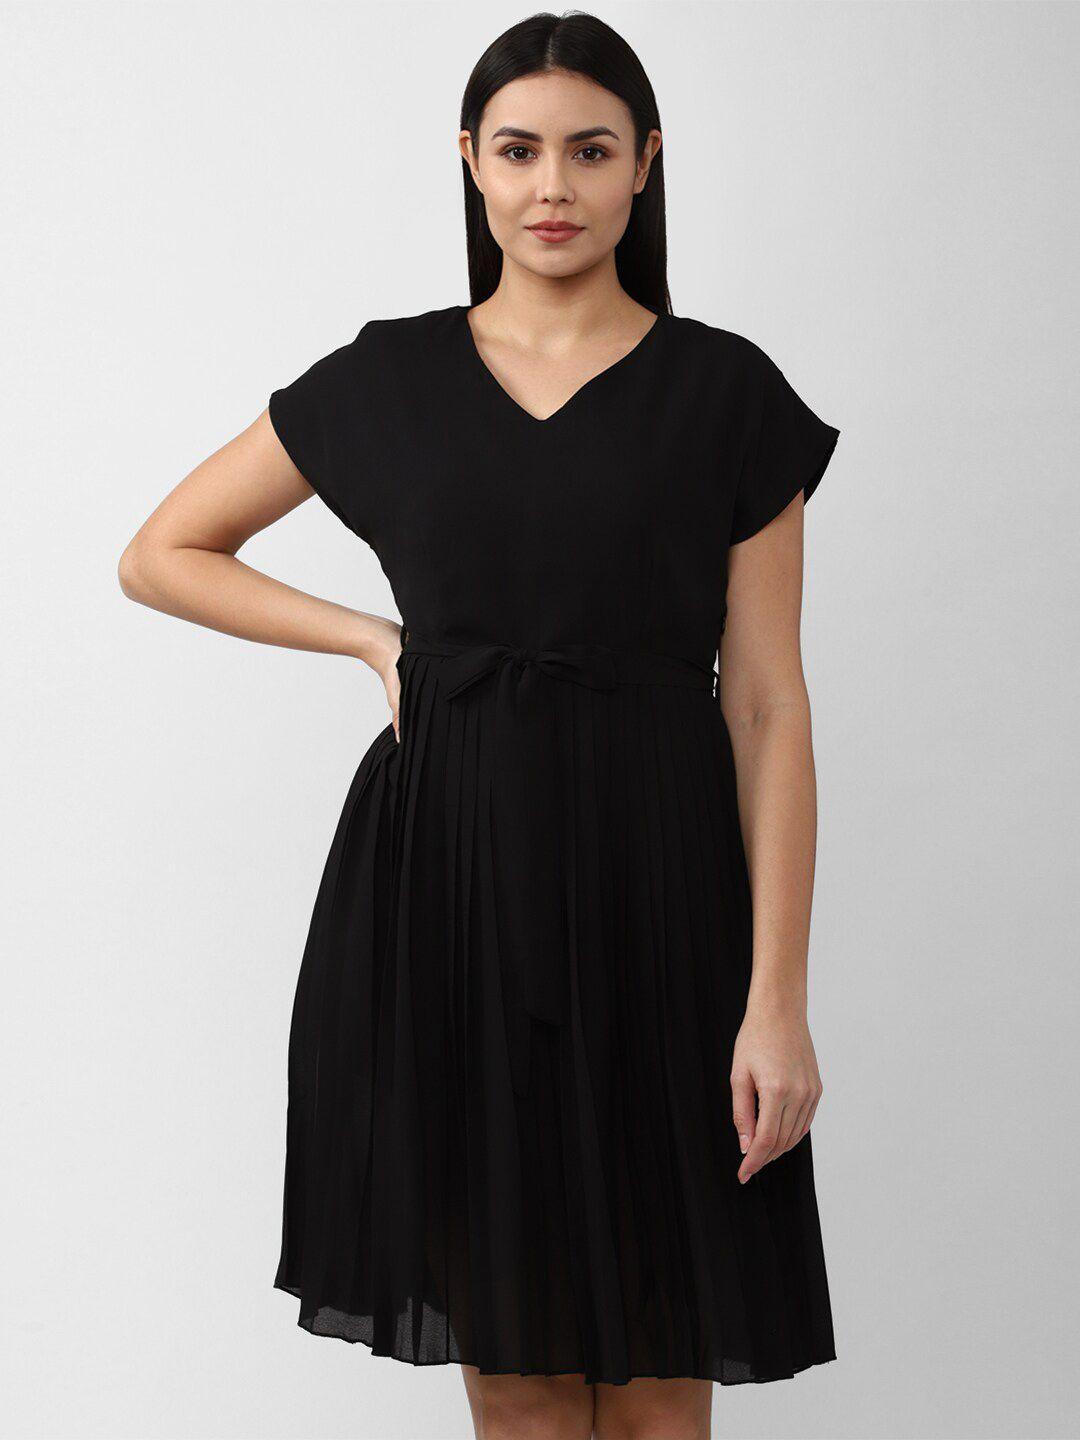 van-heusen-woman-black-dress